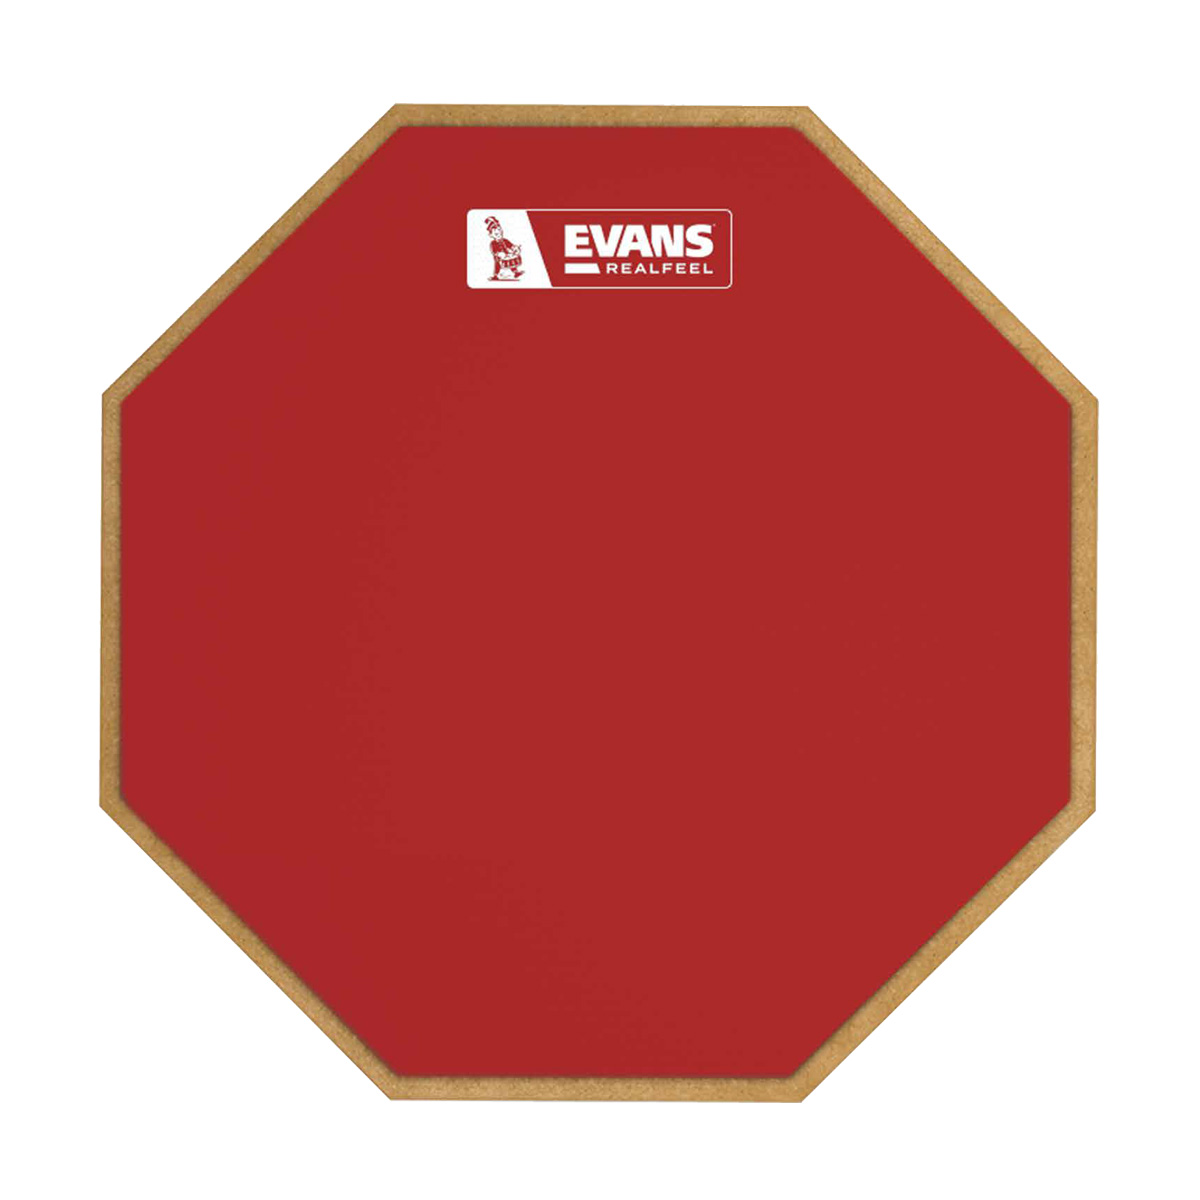 EVANS RF12G-RED エバンス トレーニングパッド RealFeel 海外並行輸入正規品 Speed Pad キャンペーンもお見逃しなく 池袋店 12inch